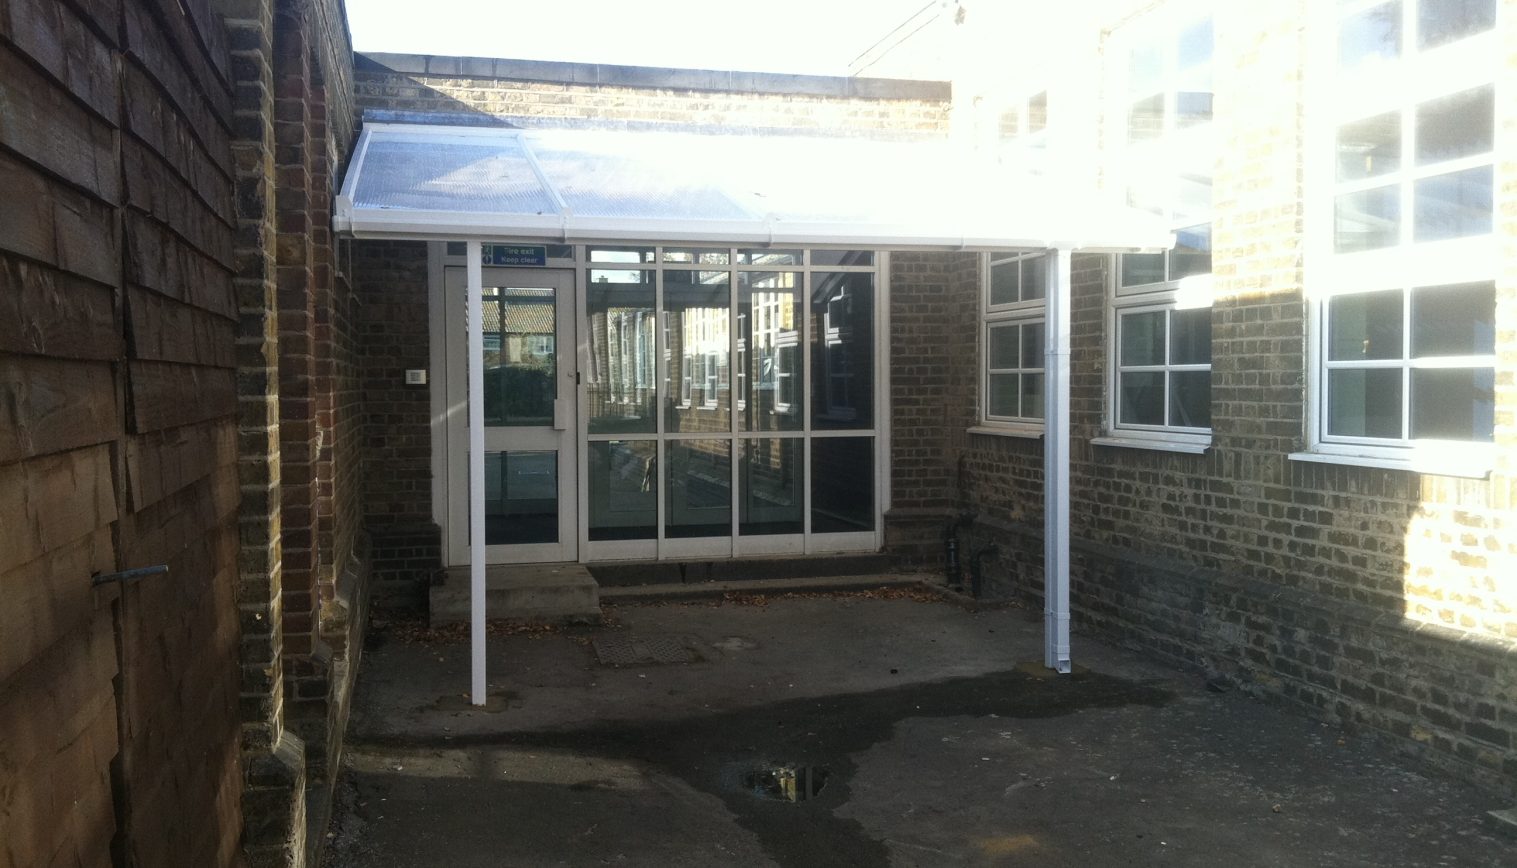 Whybridge Junior School – Wall Mounted Canopy